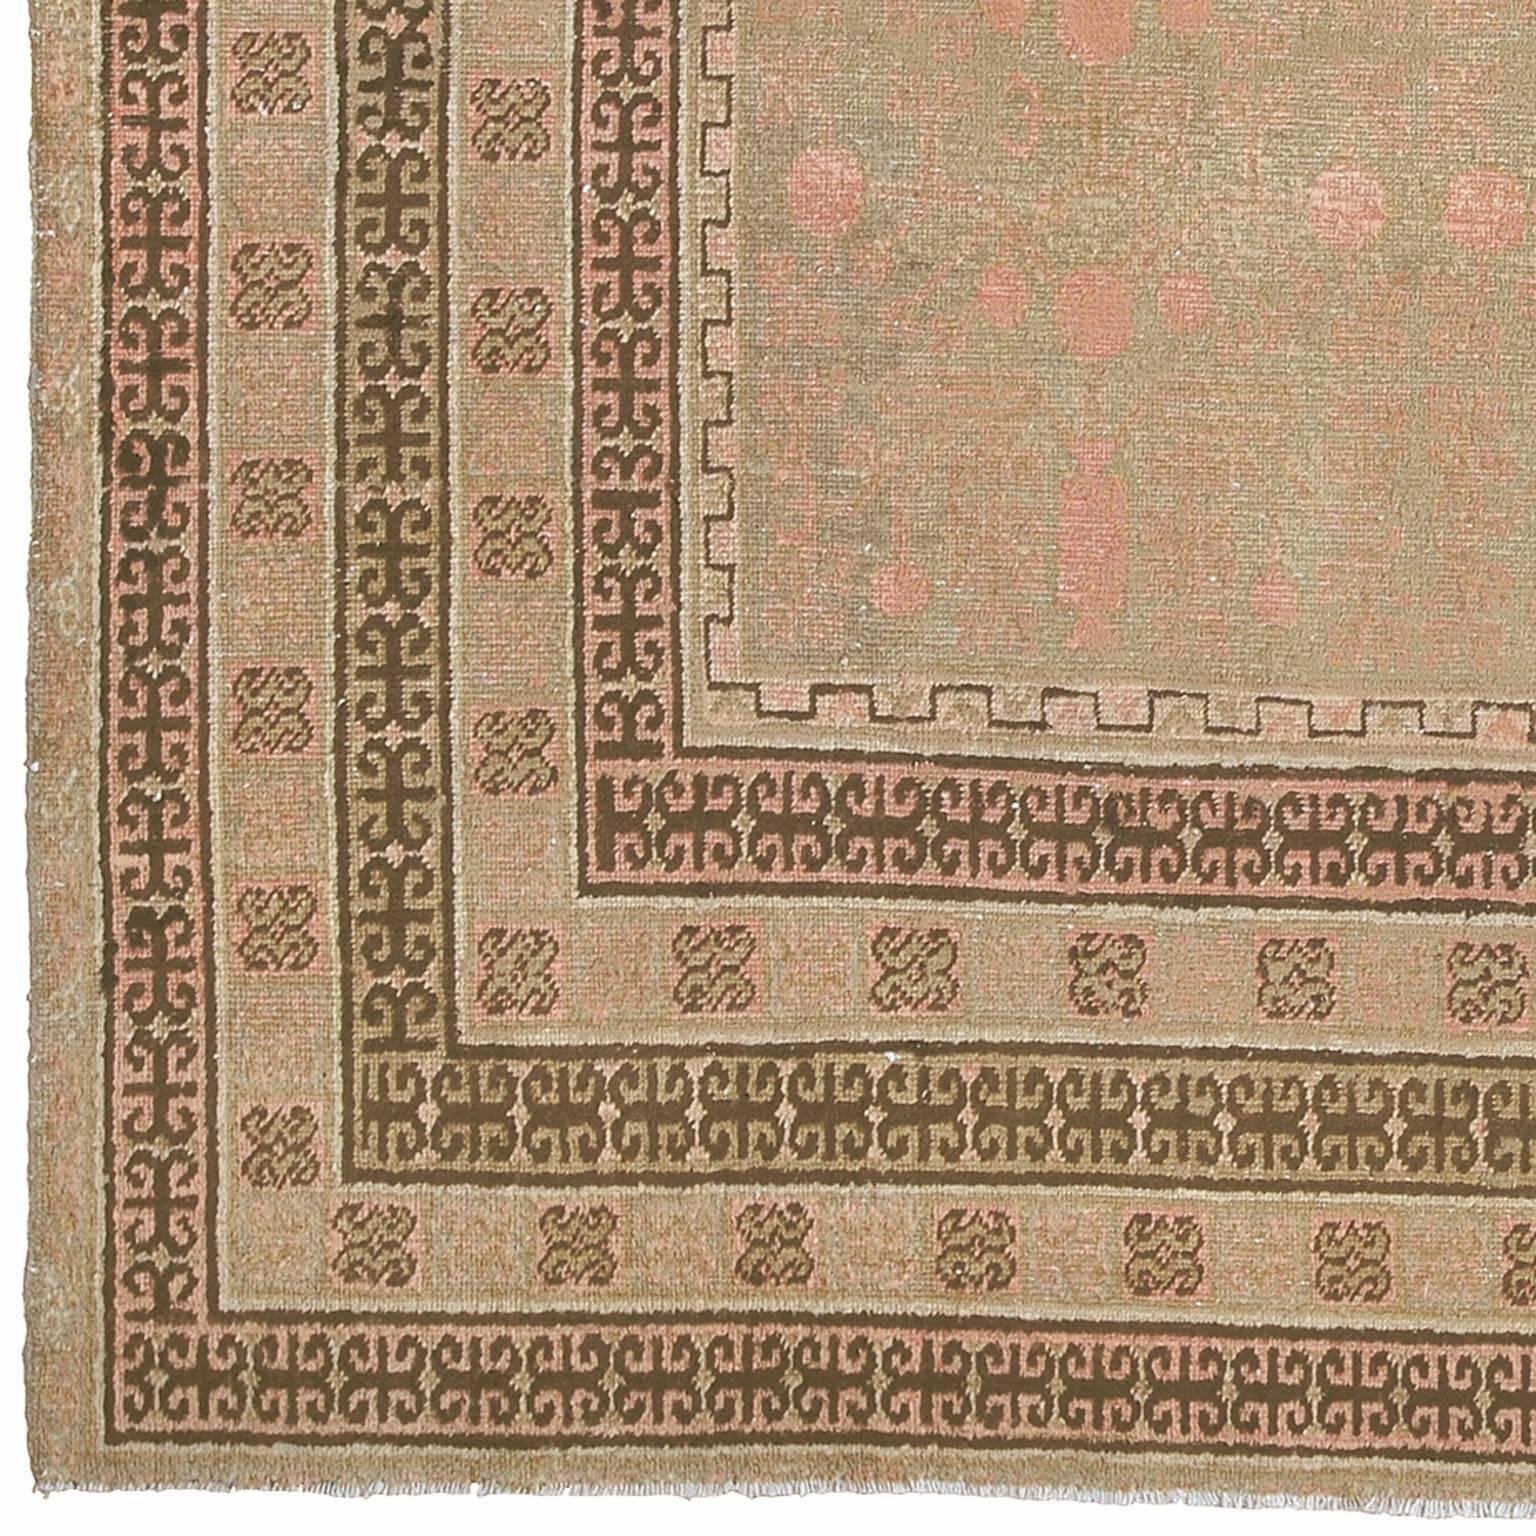 Early 20th century Khotan carpet, East Turkestan.